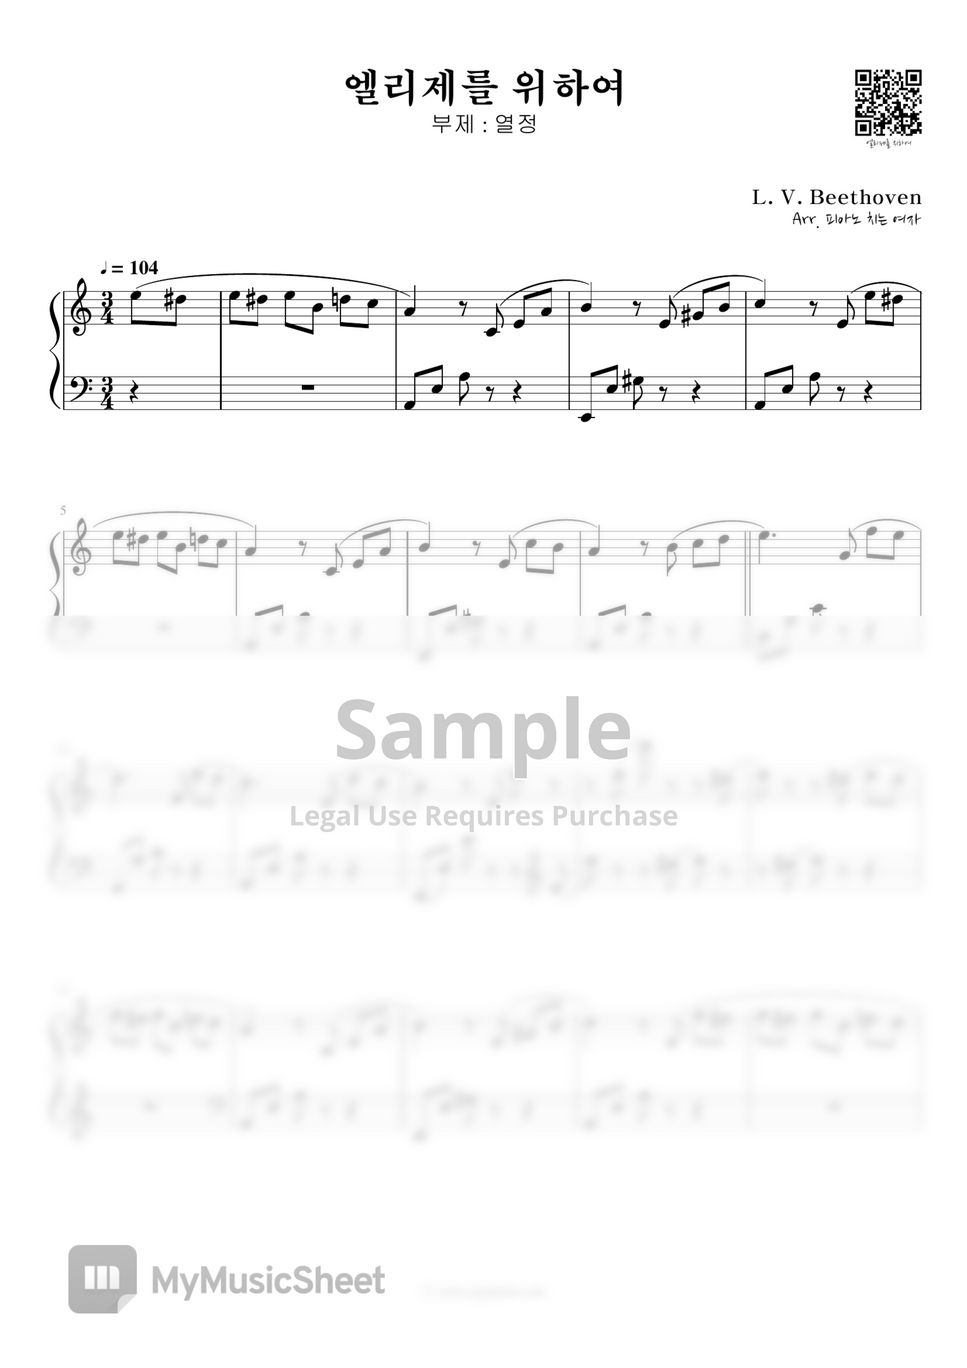 L. V. Beethoven - 엘리제를 위하여 (열정) For Elise 'Appassionata' (Remake Ver.) by 피아노 치는 여자